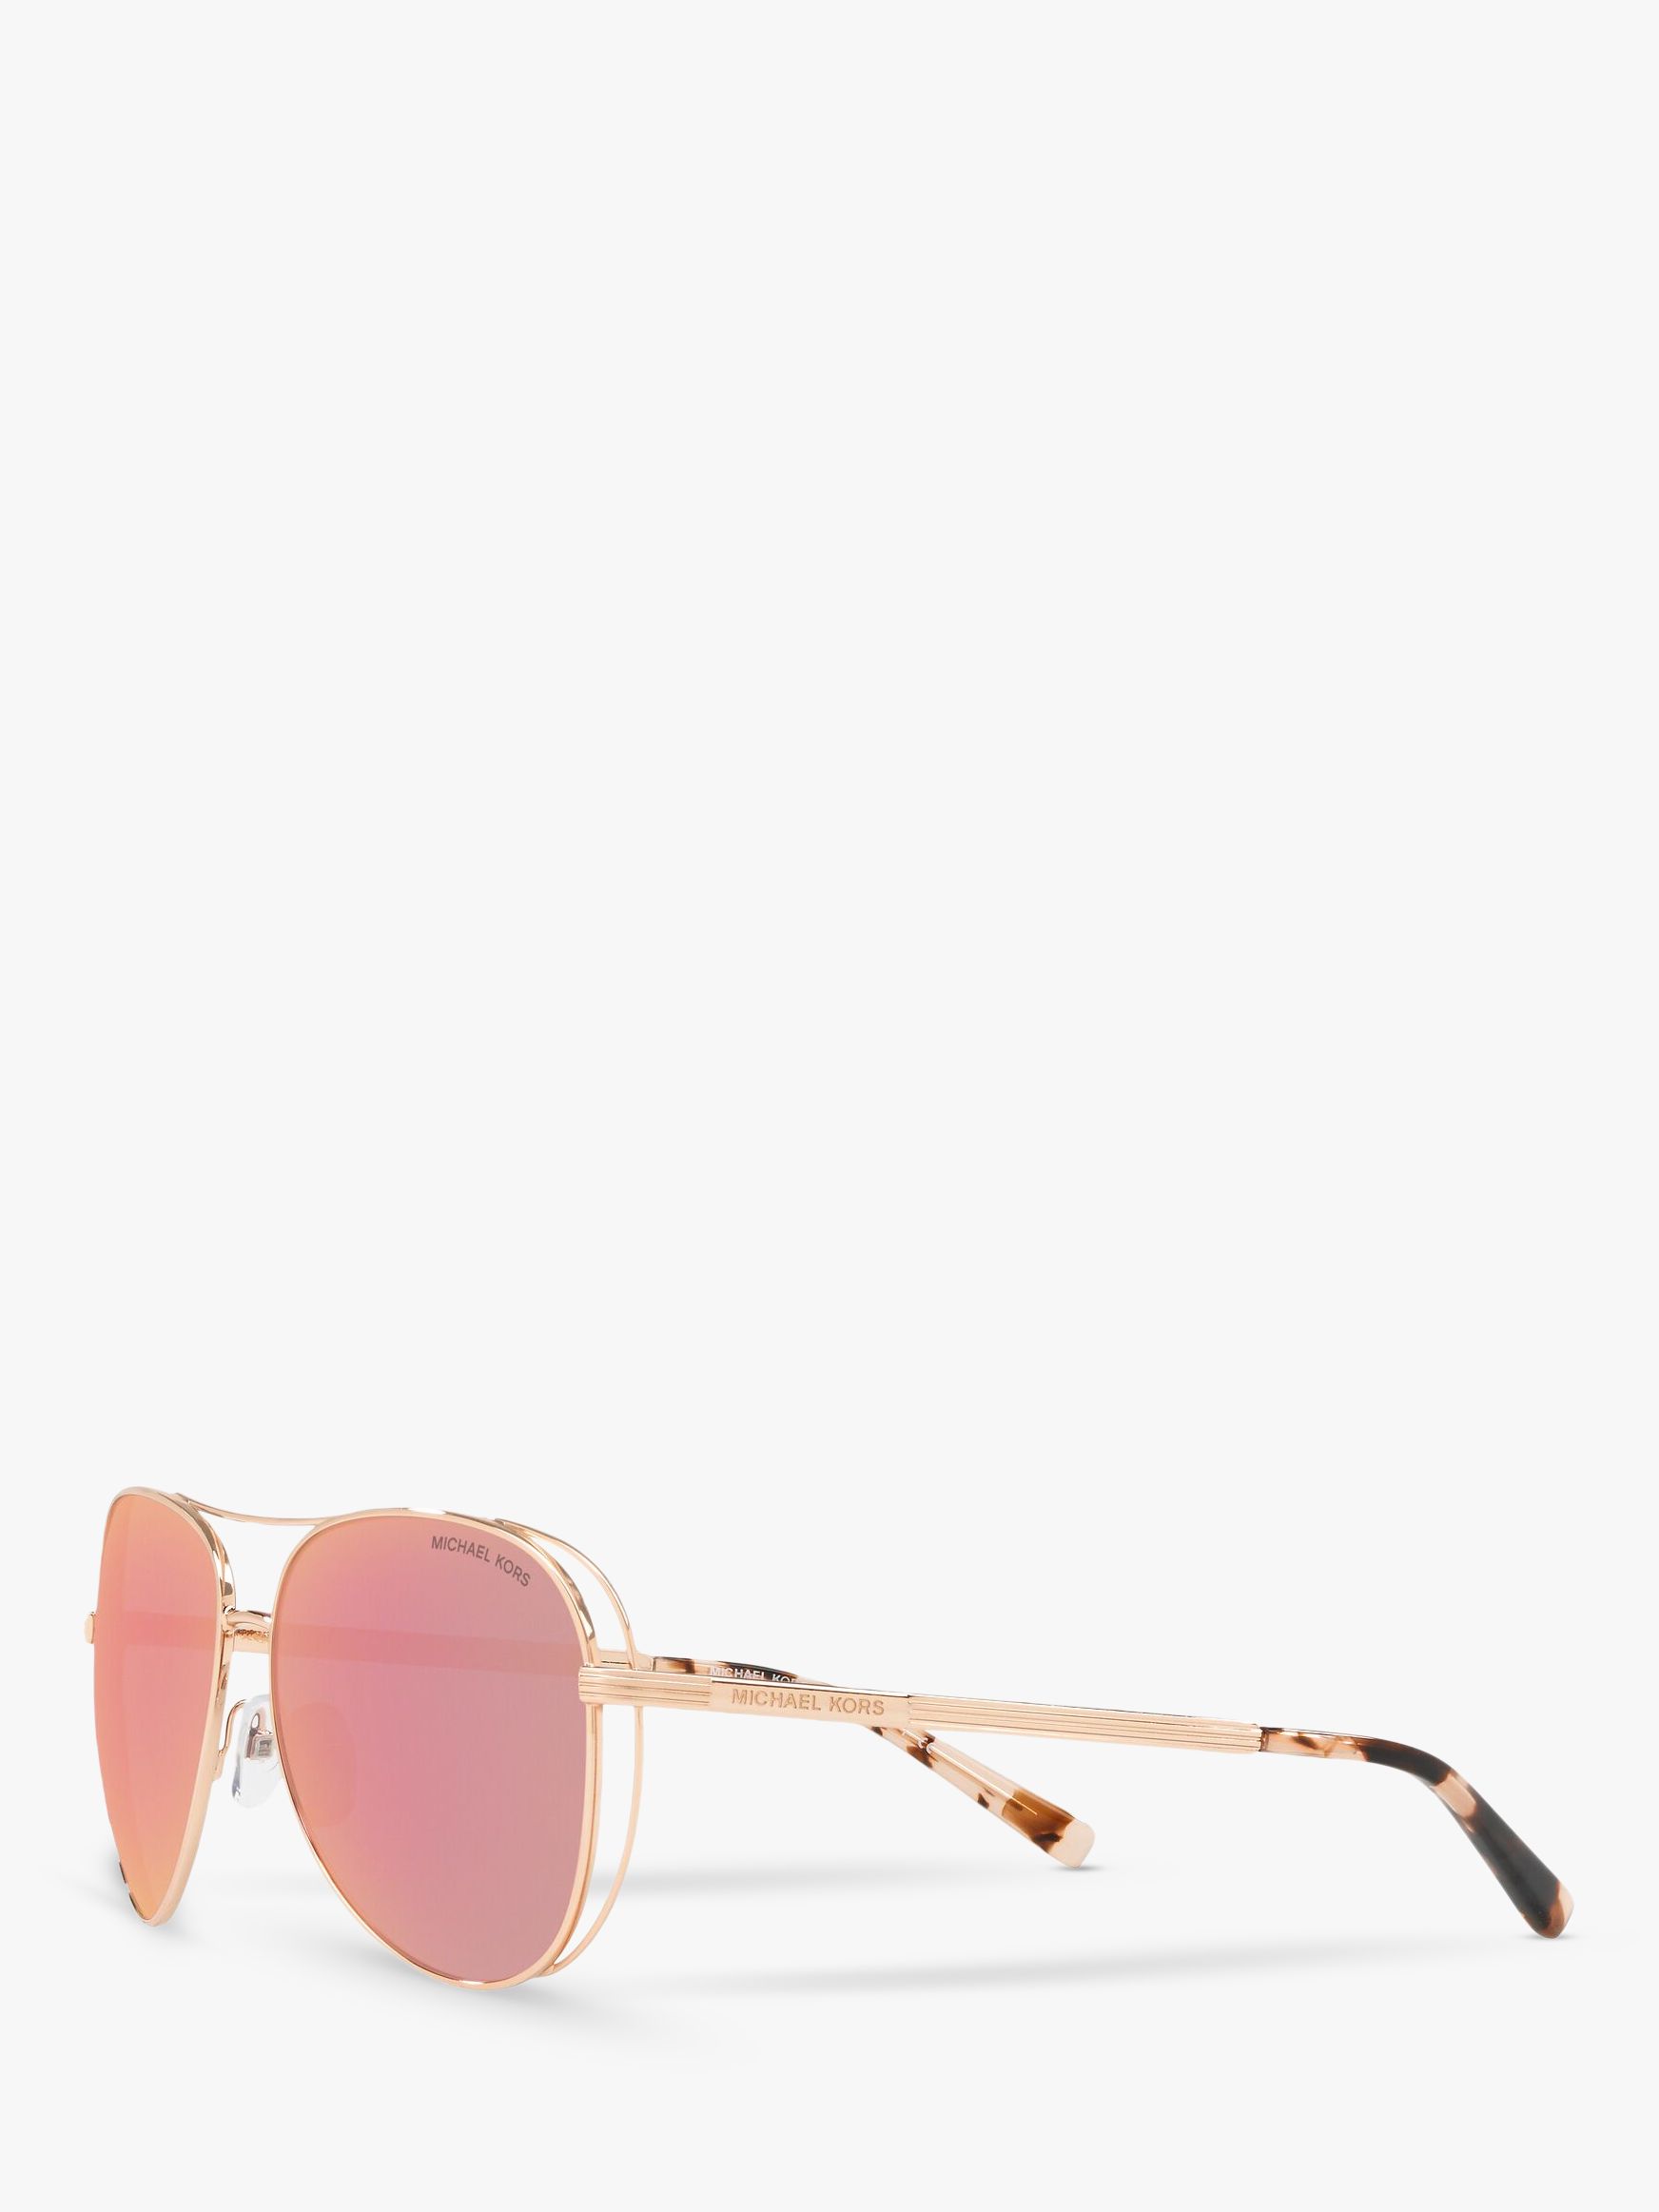 Michael Kors MK1024 Women's Lai Polarised Aviator Sunglasses, Rose Gold/Pink